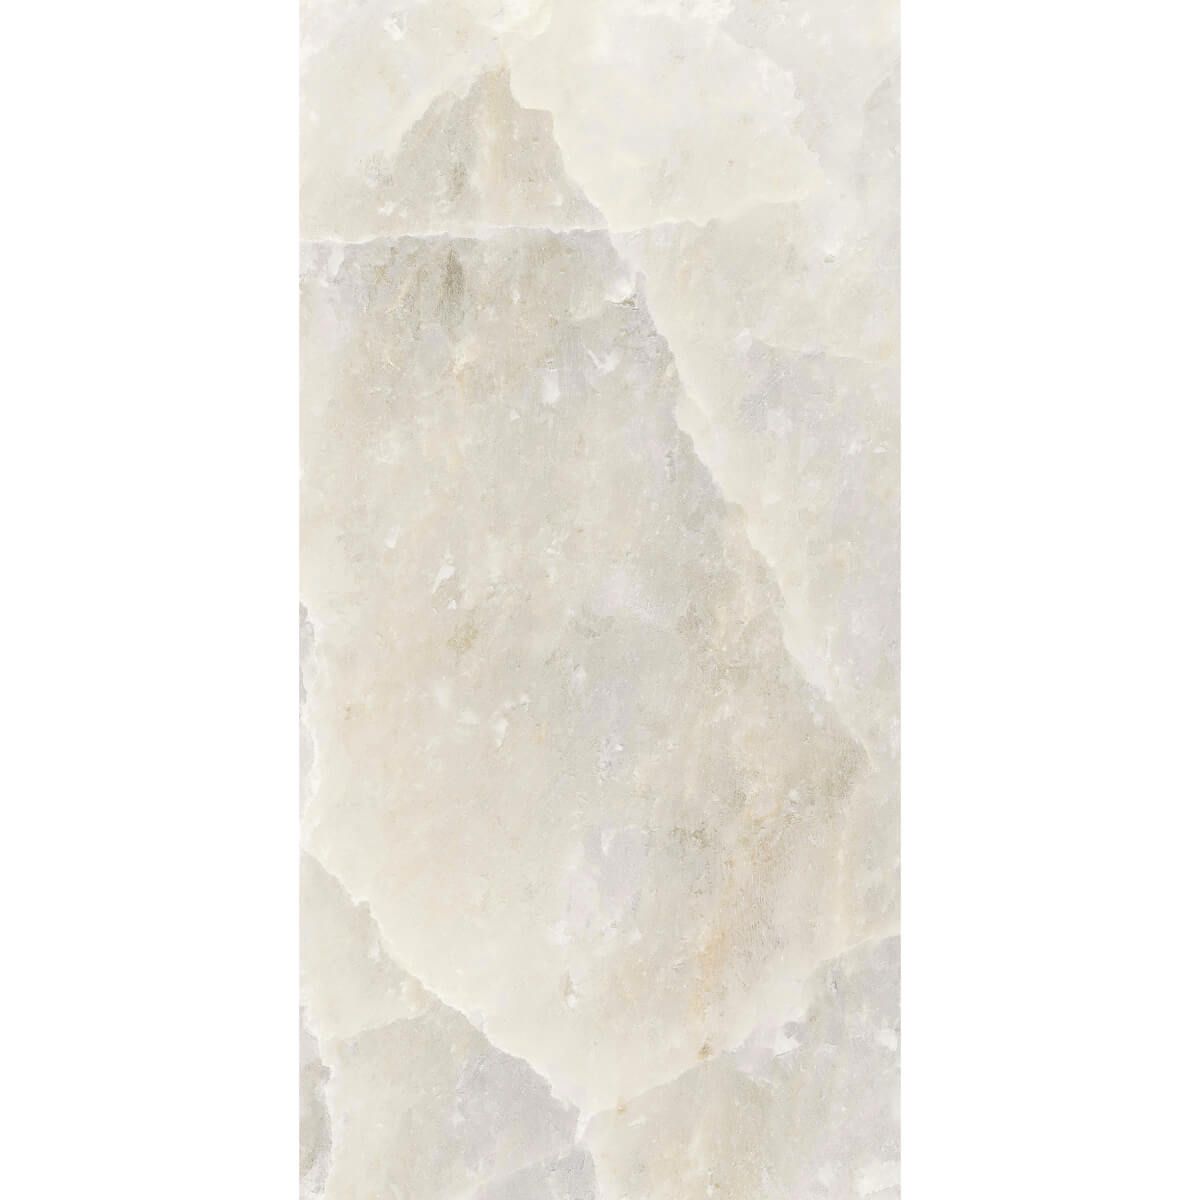 Gres Rock Salt White Gold 120x60x1 cm